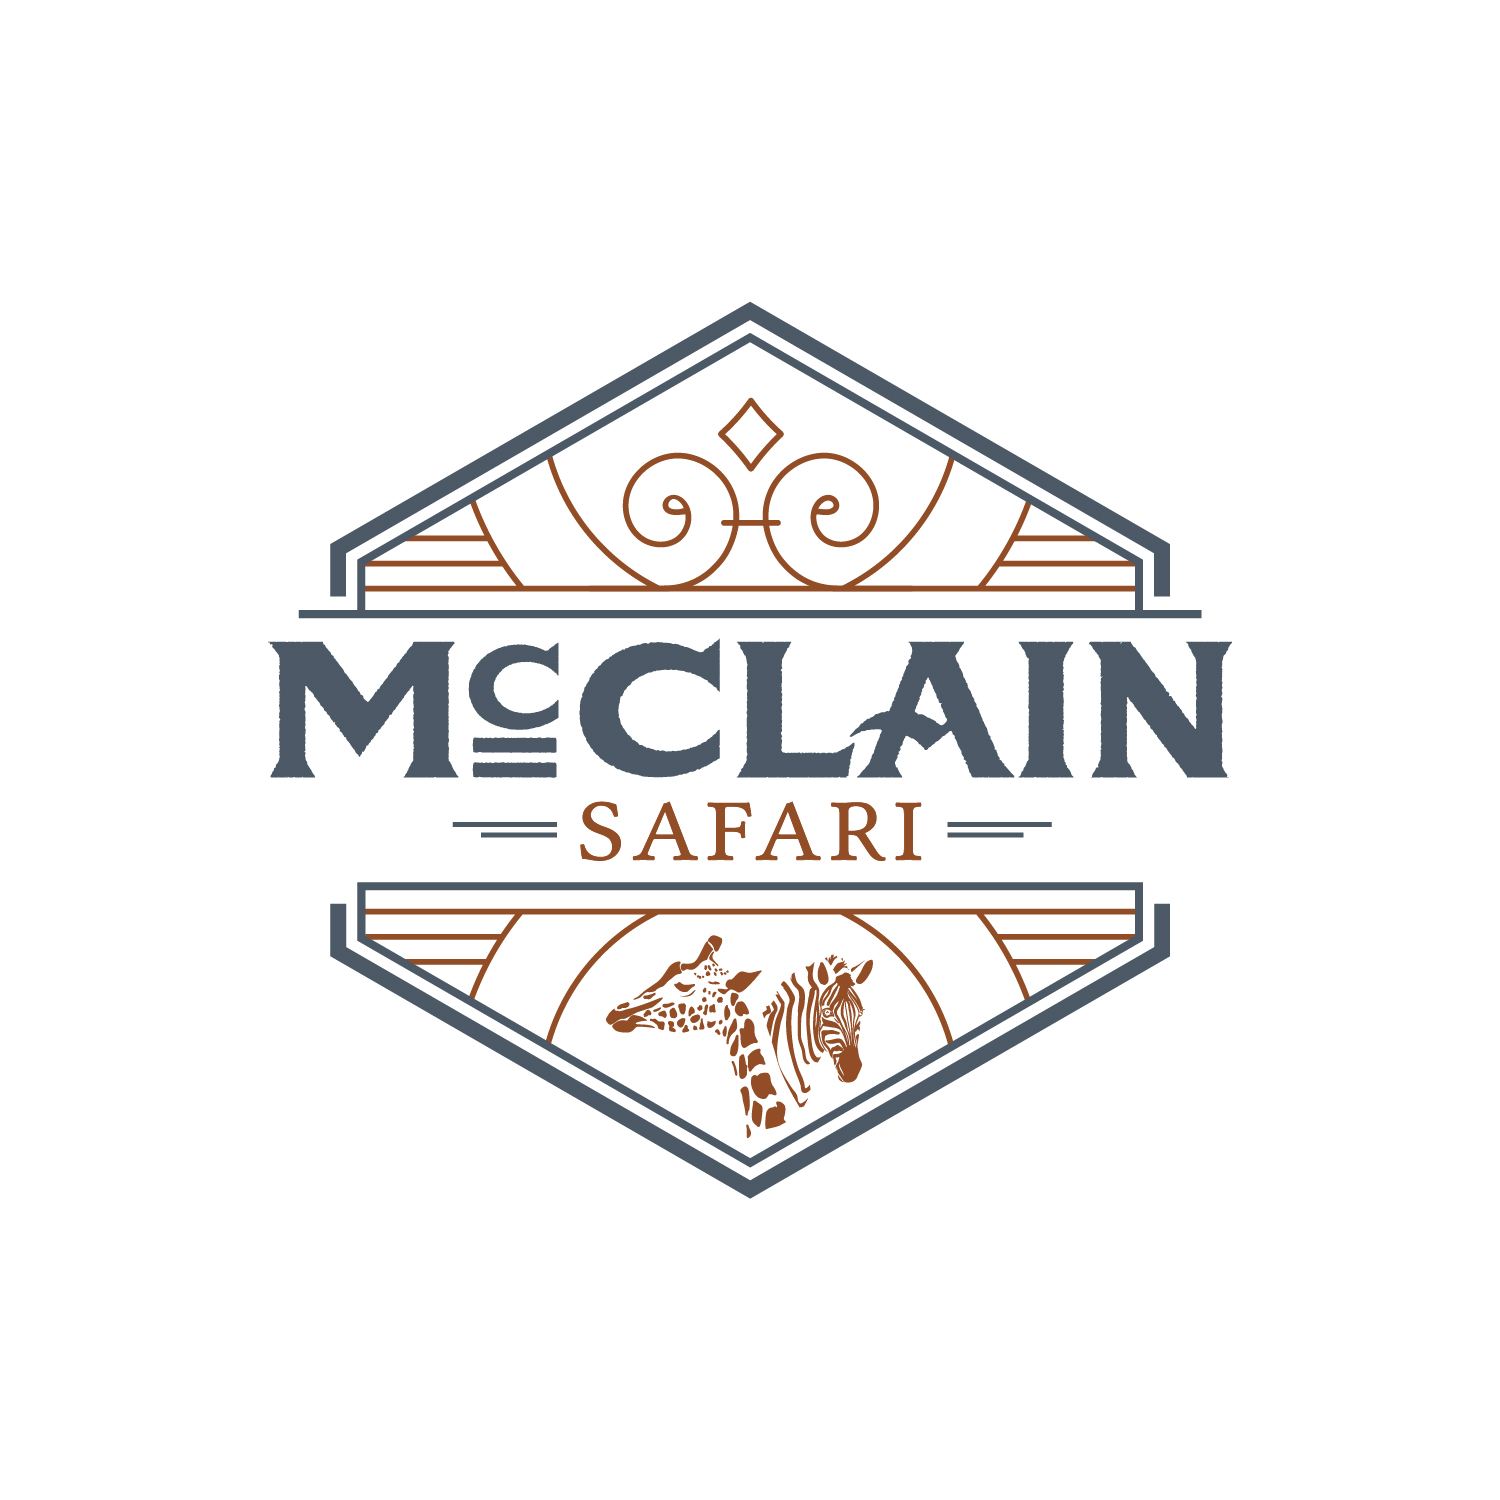 Sfari Logo - Safari – McClain